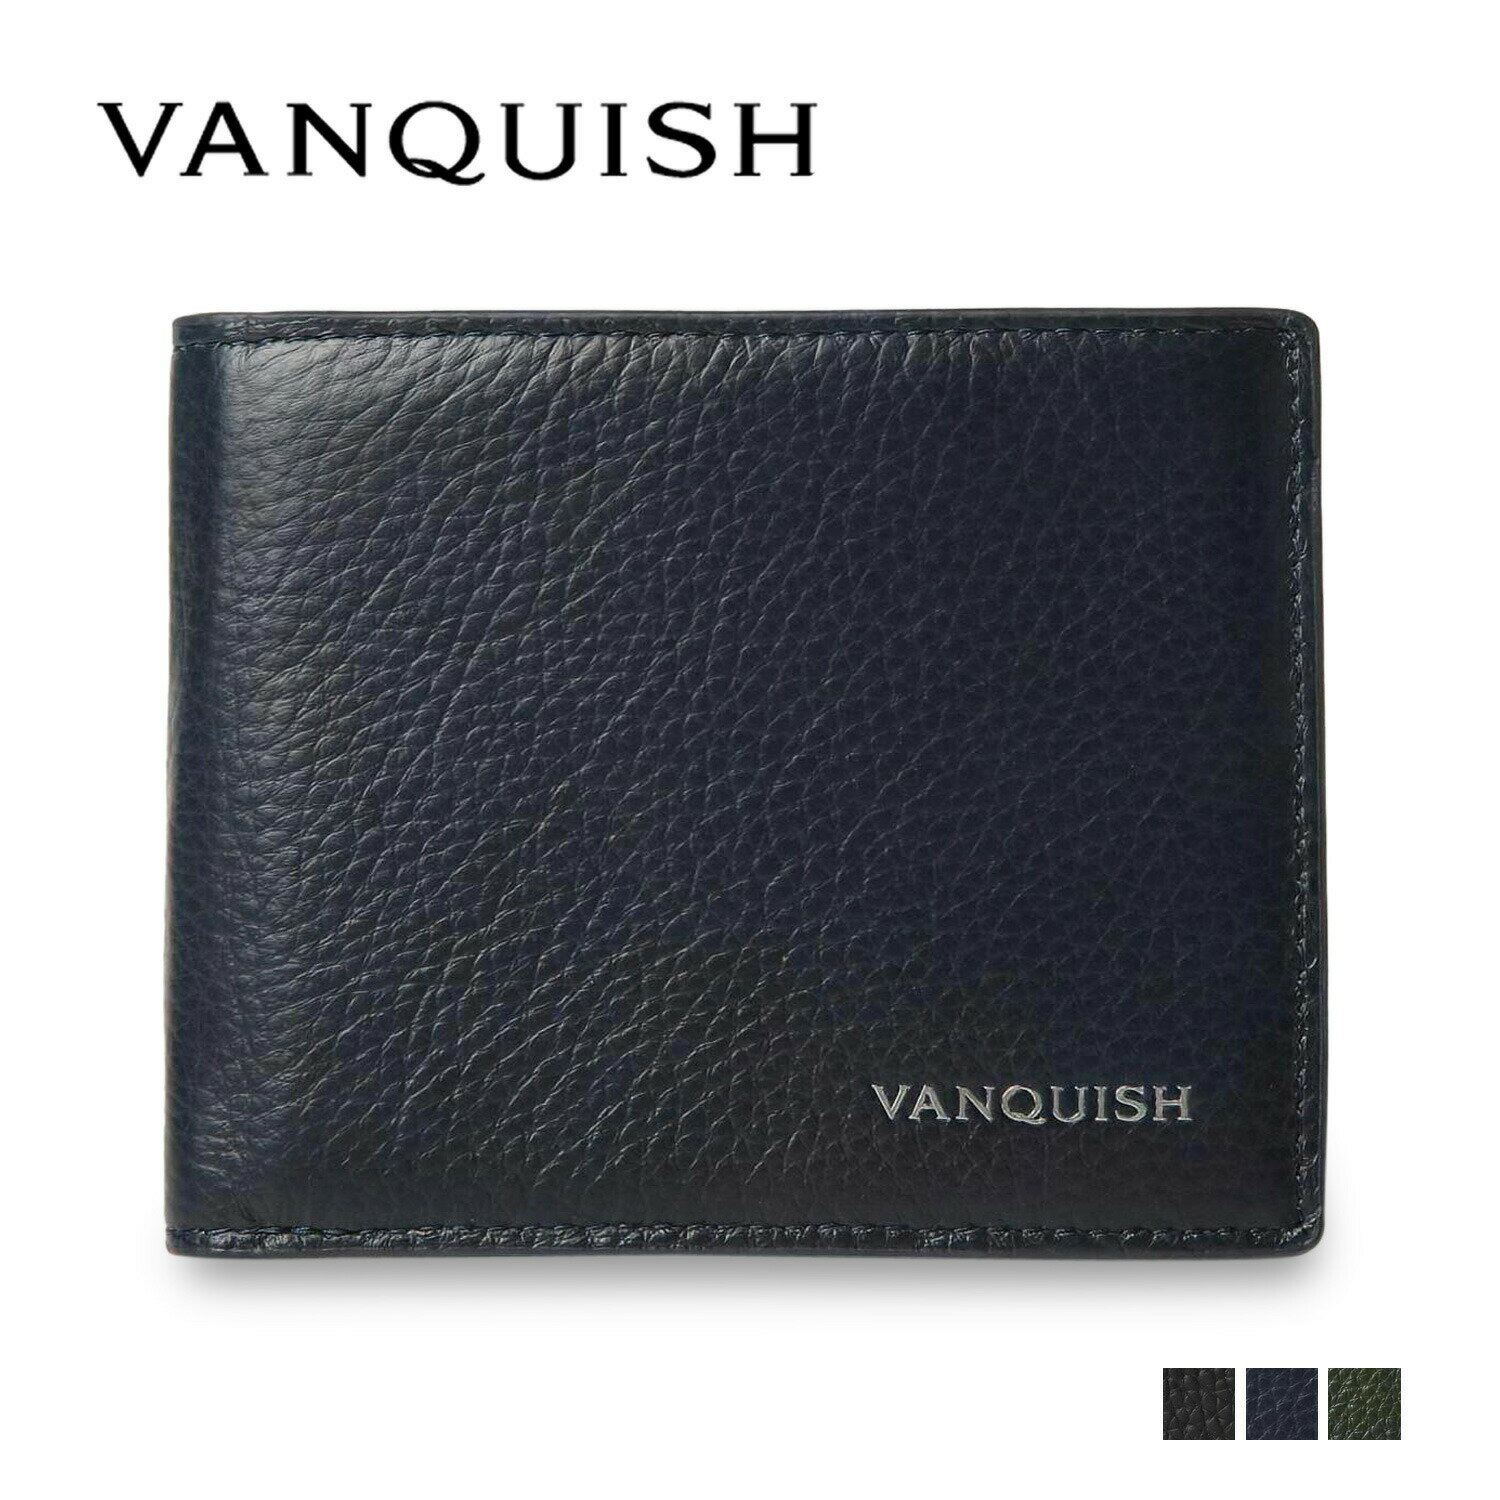 VANQUISH WALLET ヴァンキッシュ 二つ折り財布 メンズ 本革 ブラック ネイビー ダーク グリーン 黒 43520